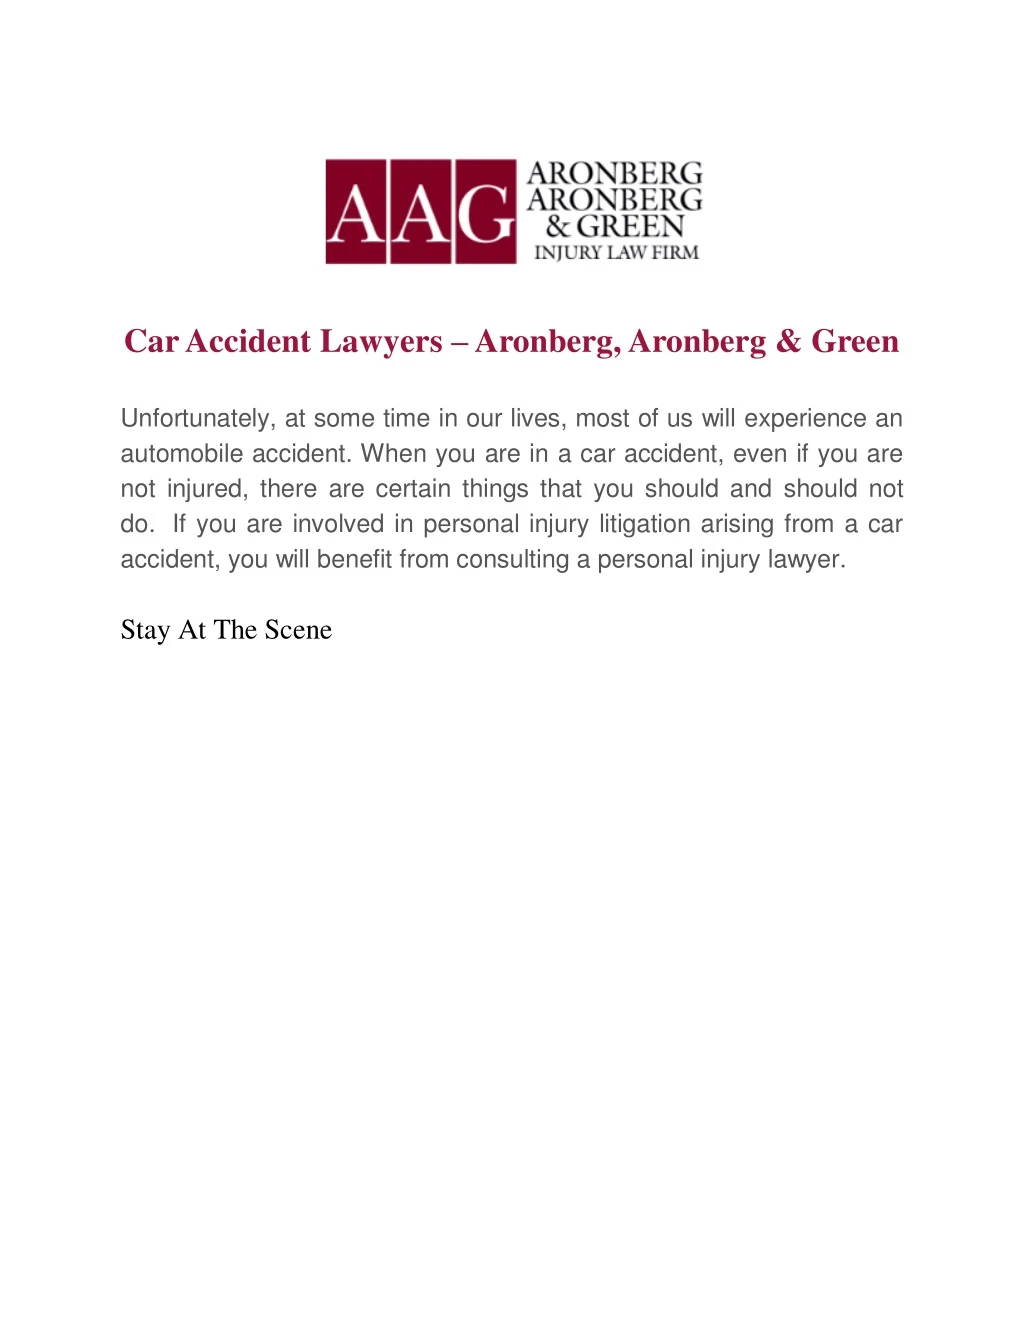 car accident lawyers aronberg aronberg green